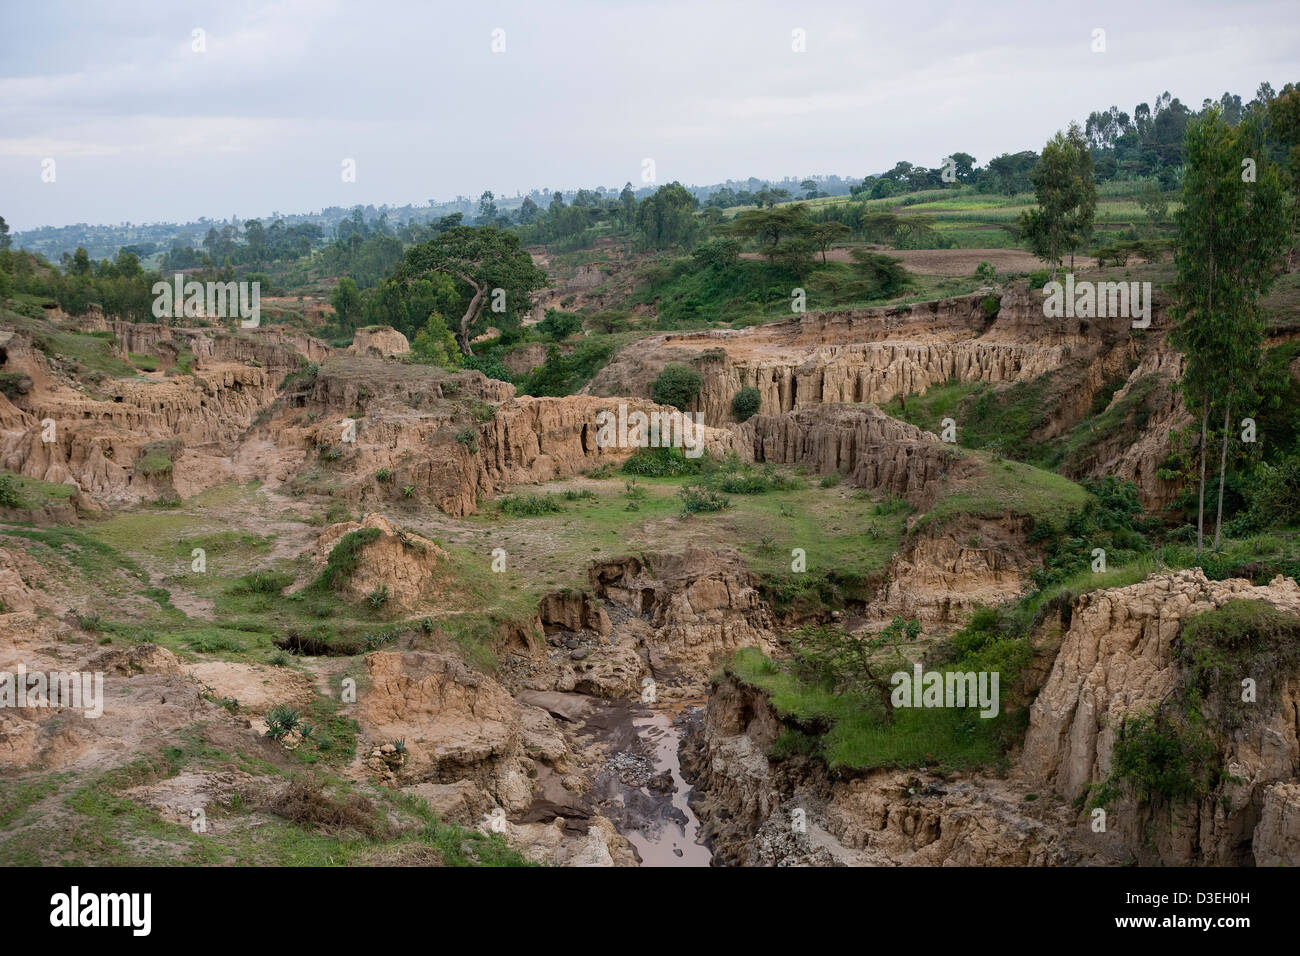 JAFFA VILLAGE, WOLAYITA ZONE, SOUTHERN ETHIOPIA, 19TH AUGUST 2008: River erosion due to deforestation upstream destroys land Stock Photo